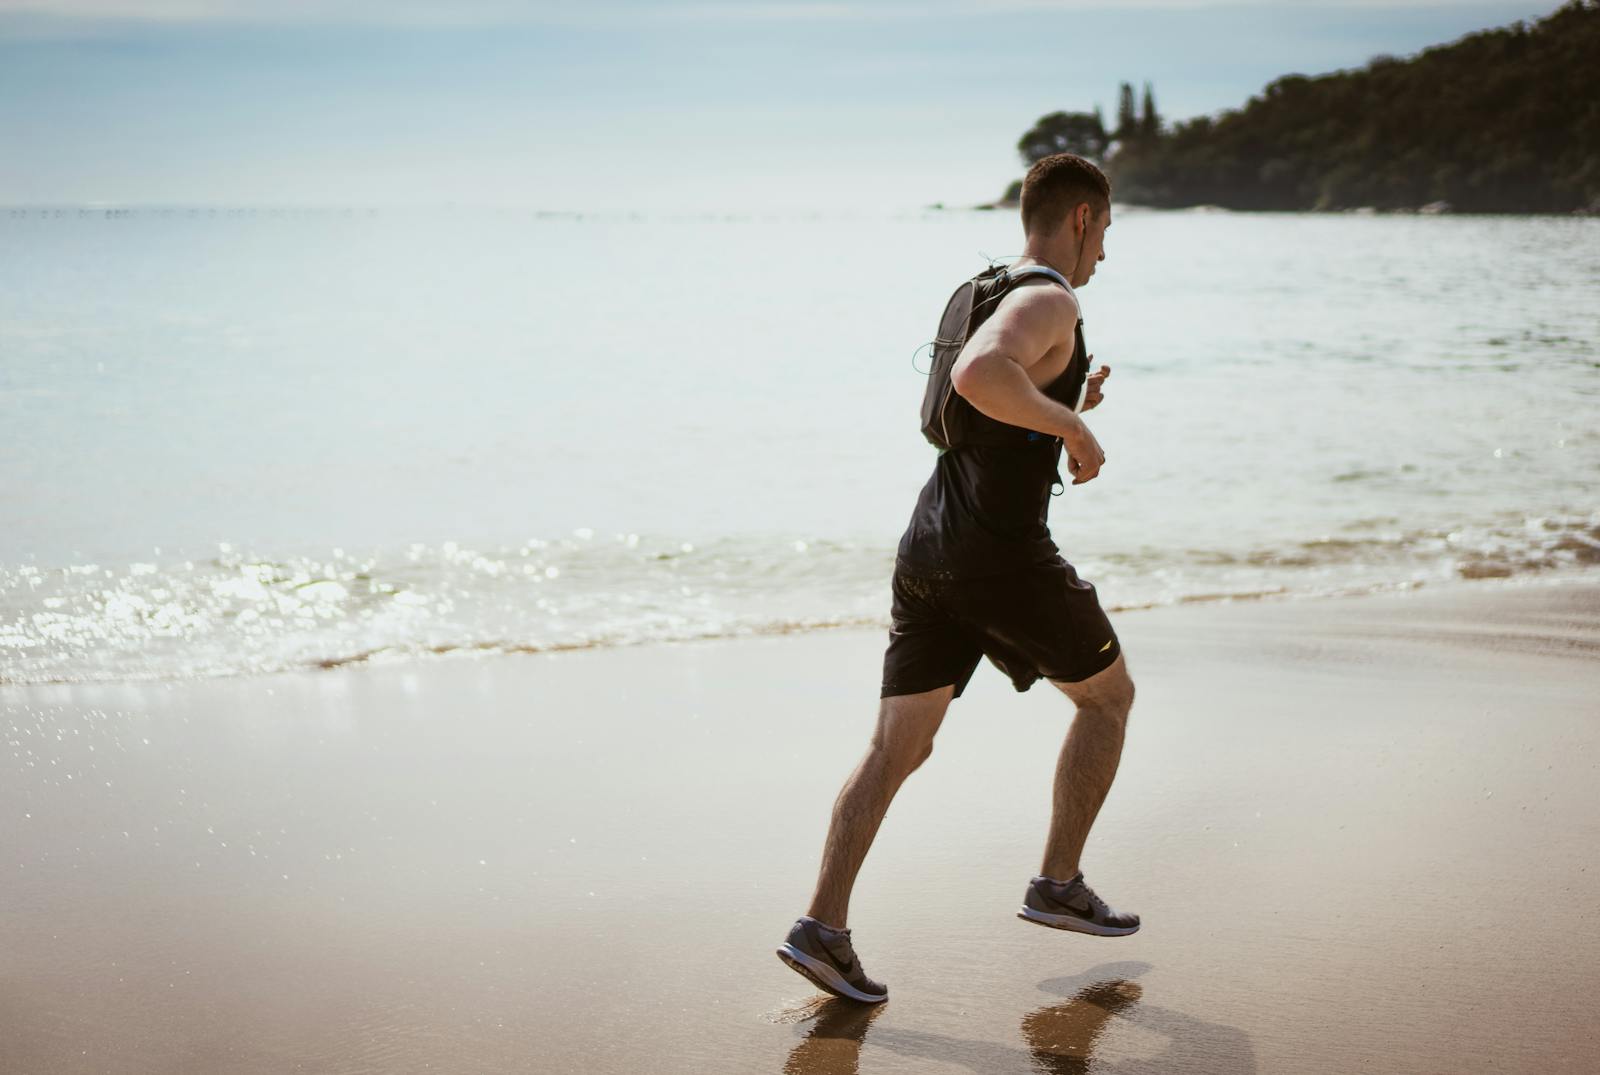 Man Wearing Black Tank Top and Running on Seashore. Causes of Knee Pain